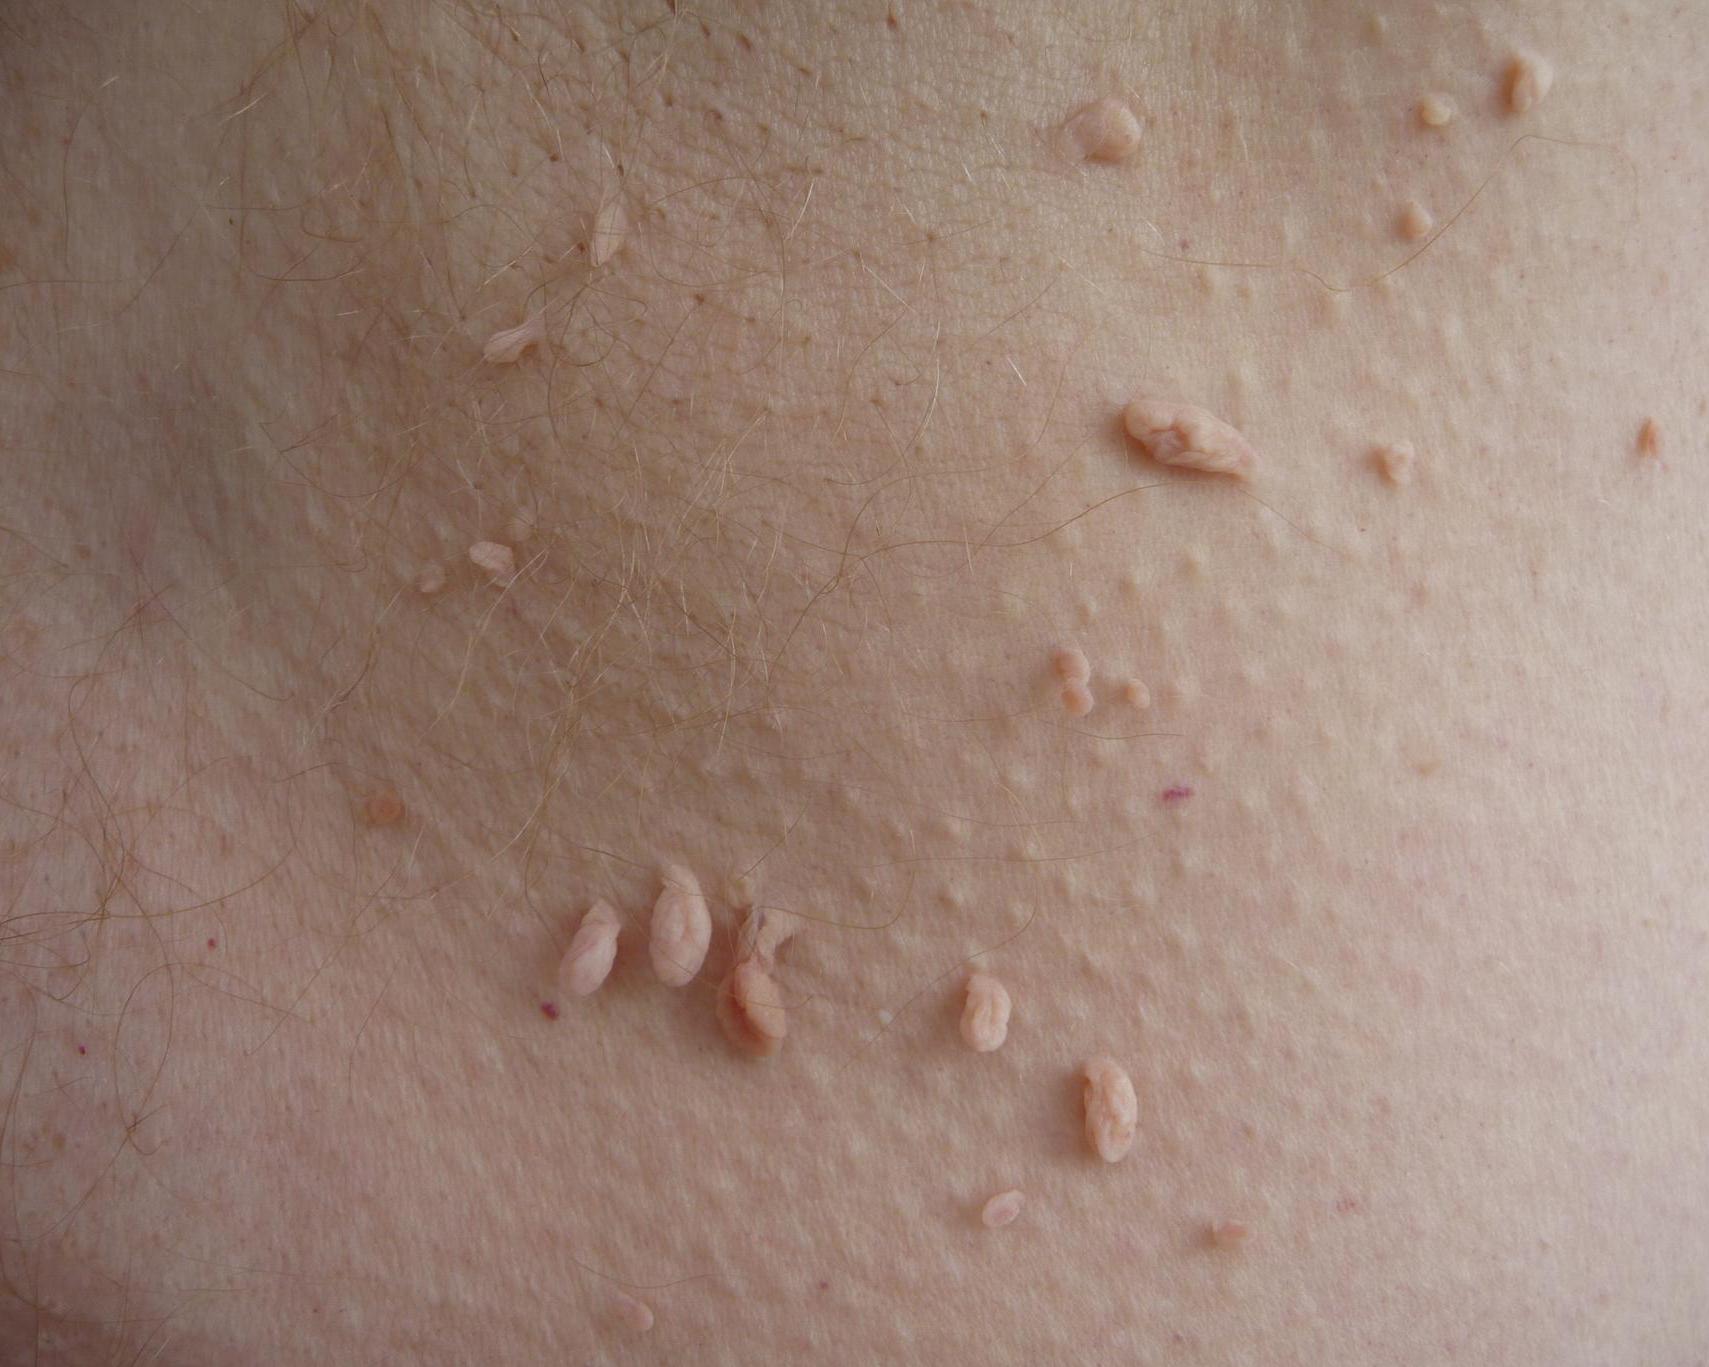 Genital Warts Skin Tags  newhairstylesformen2014.com